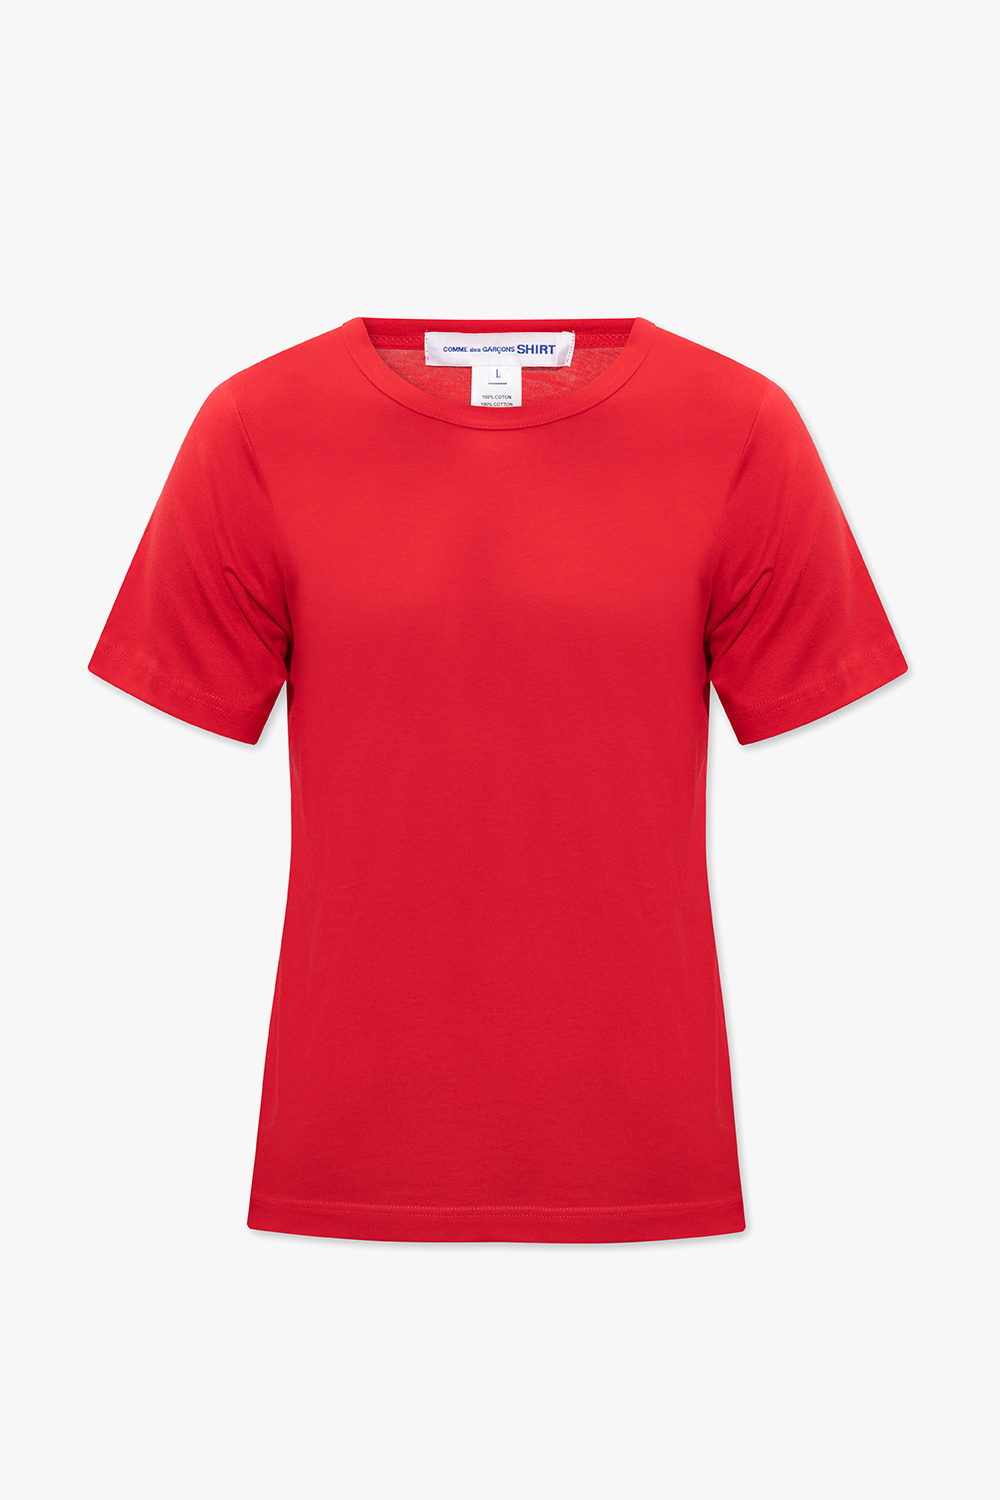 Comme des Garçons Shirt Jordan swoosh-logo print T-shirt